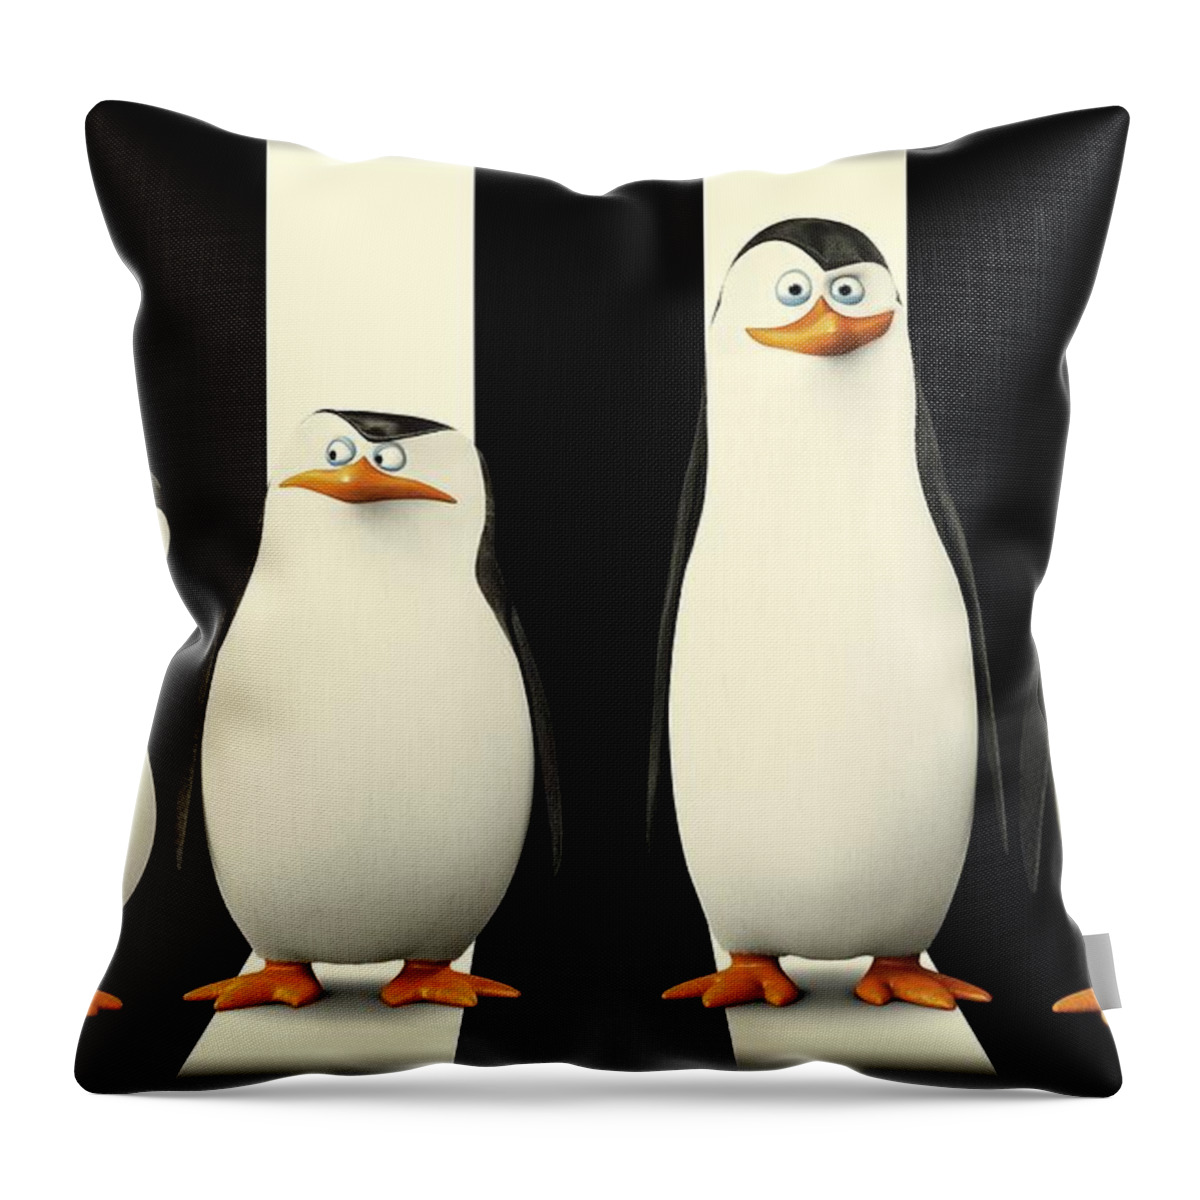 Penguins Of Madagascar Throw Pillow featuring the digital art Penguins of Madagascar by Movie Poster Prints